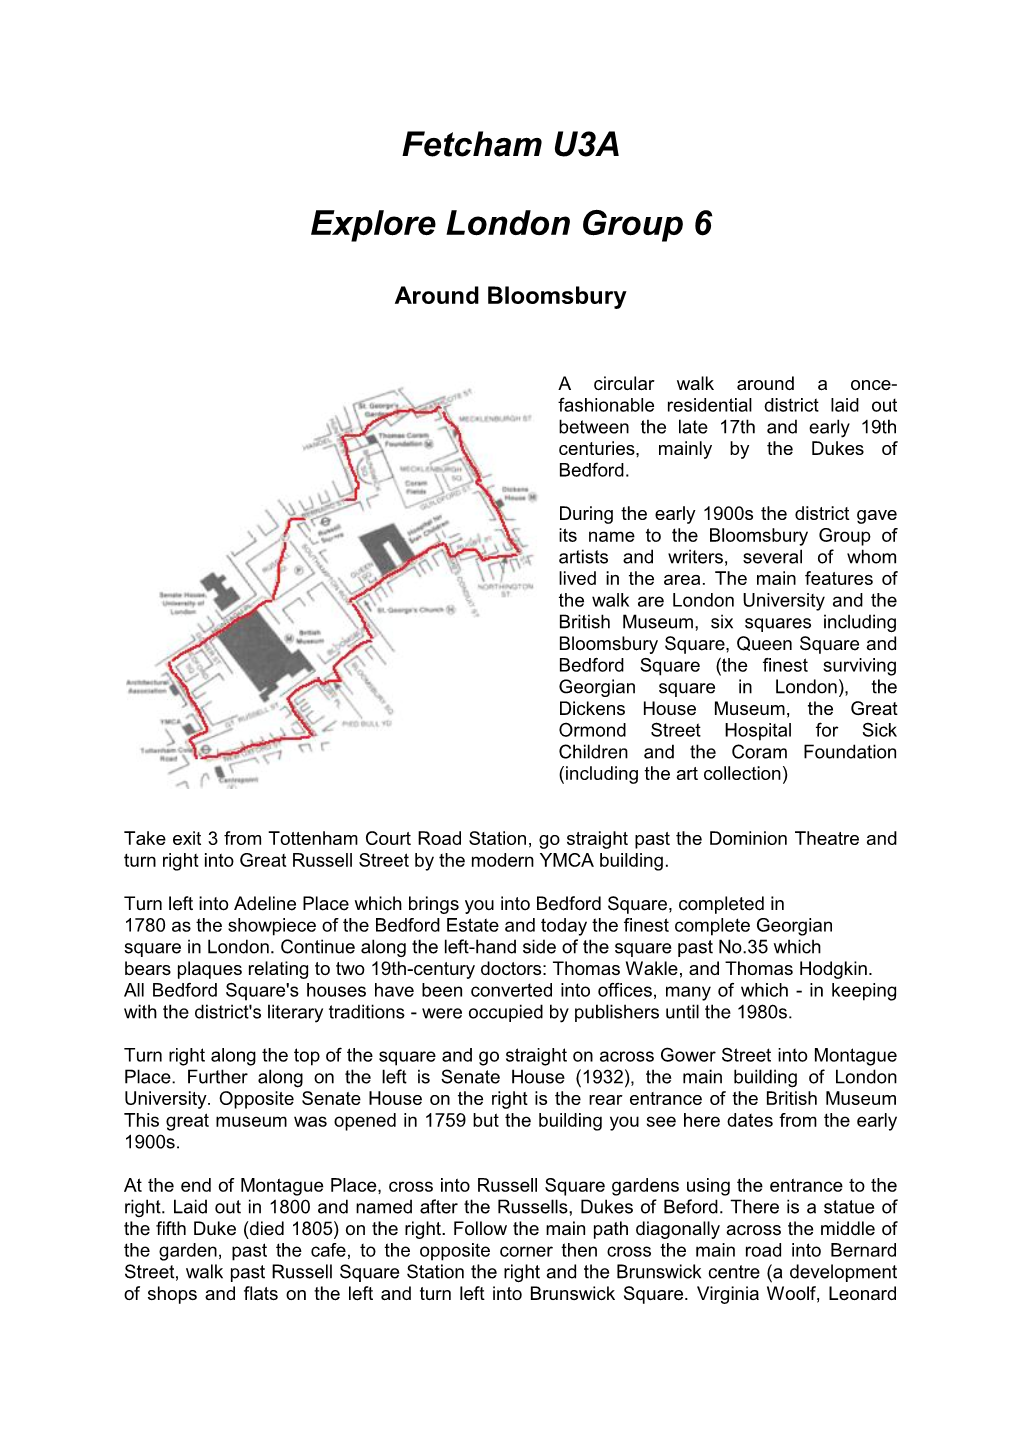 Fetcham U3A Explore London Group 6